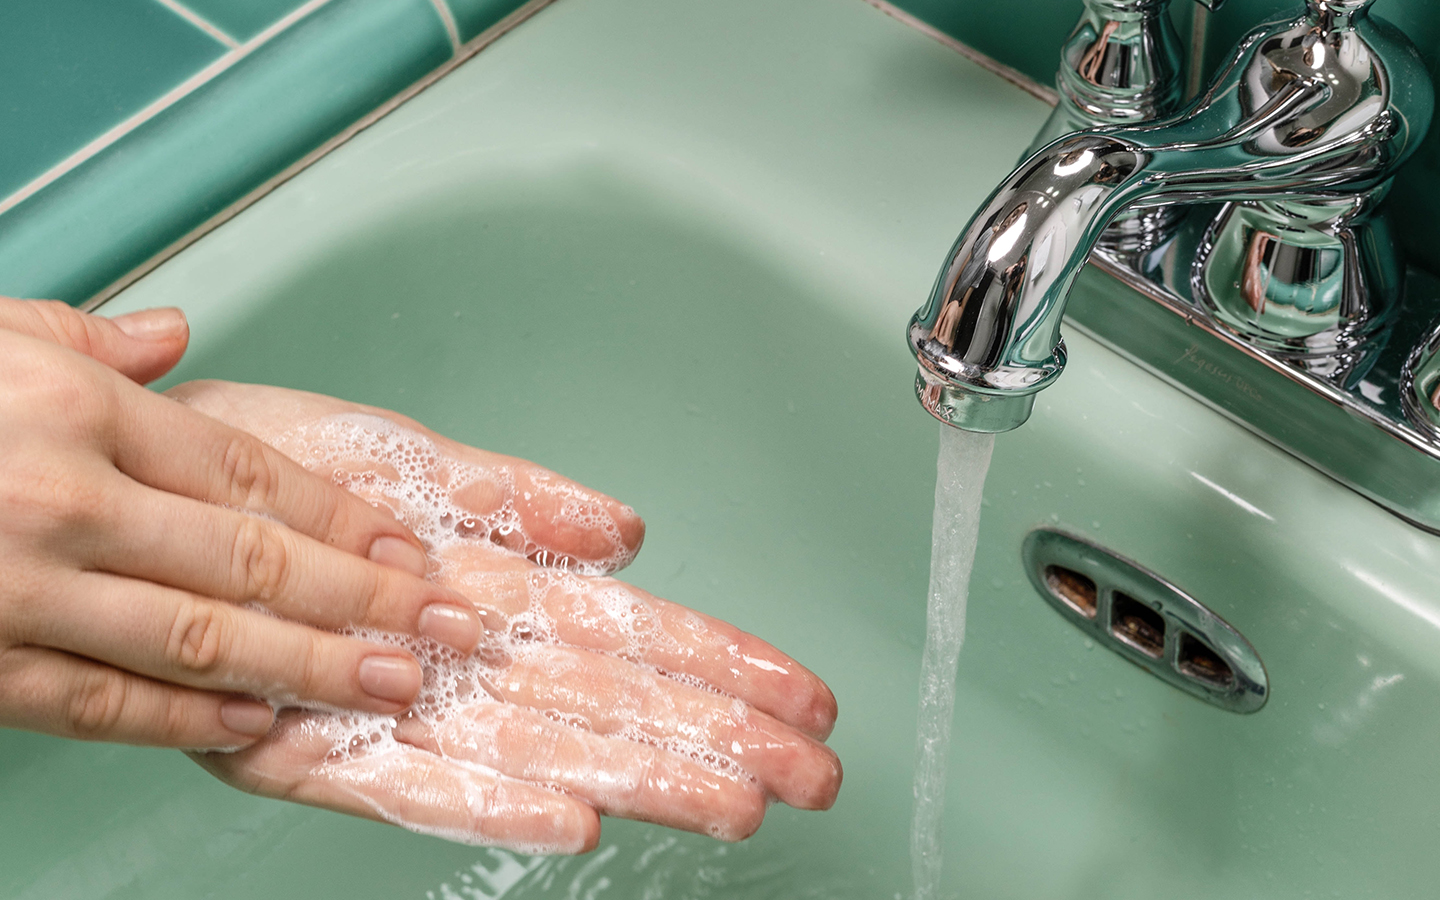 Expansive-hand-washing